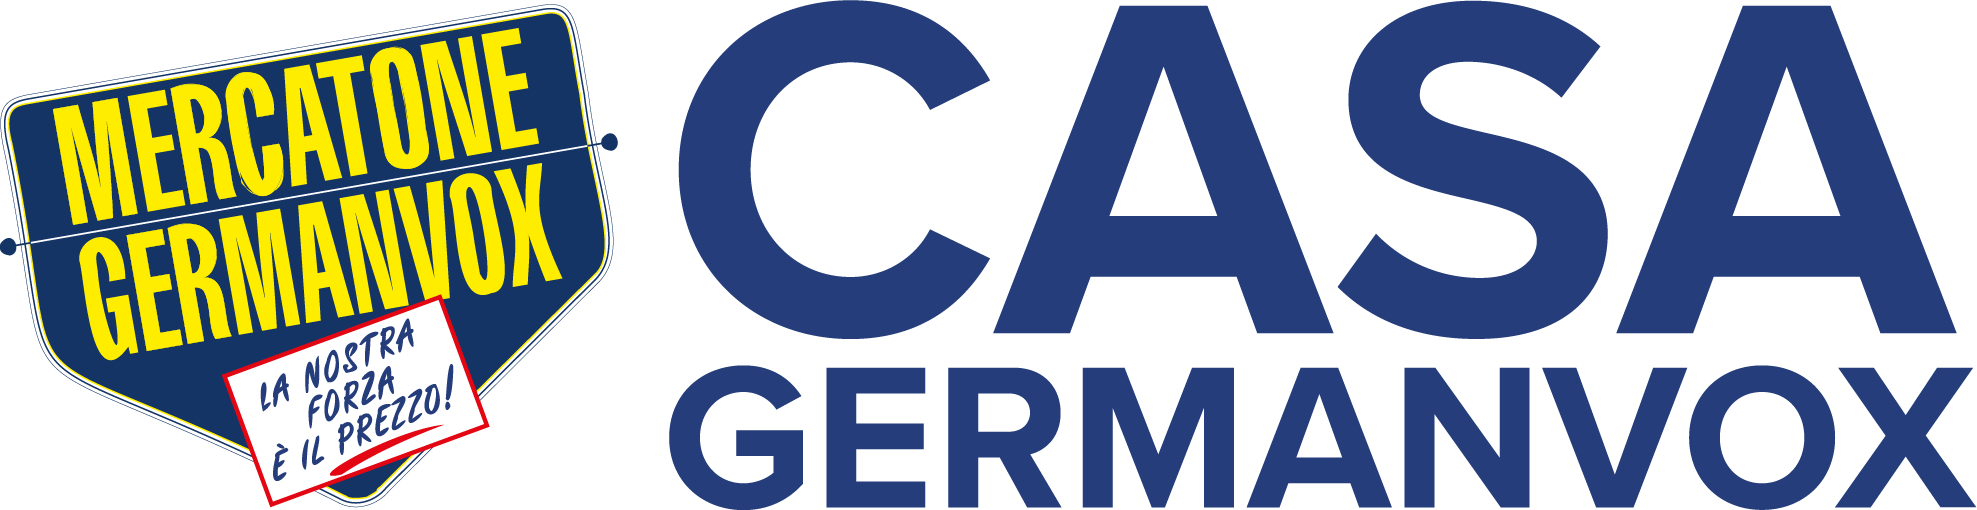 Logo Casa Germanvox 2021